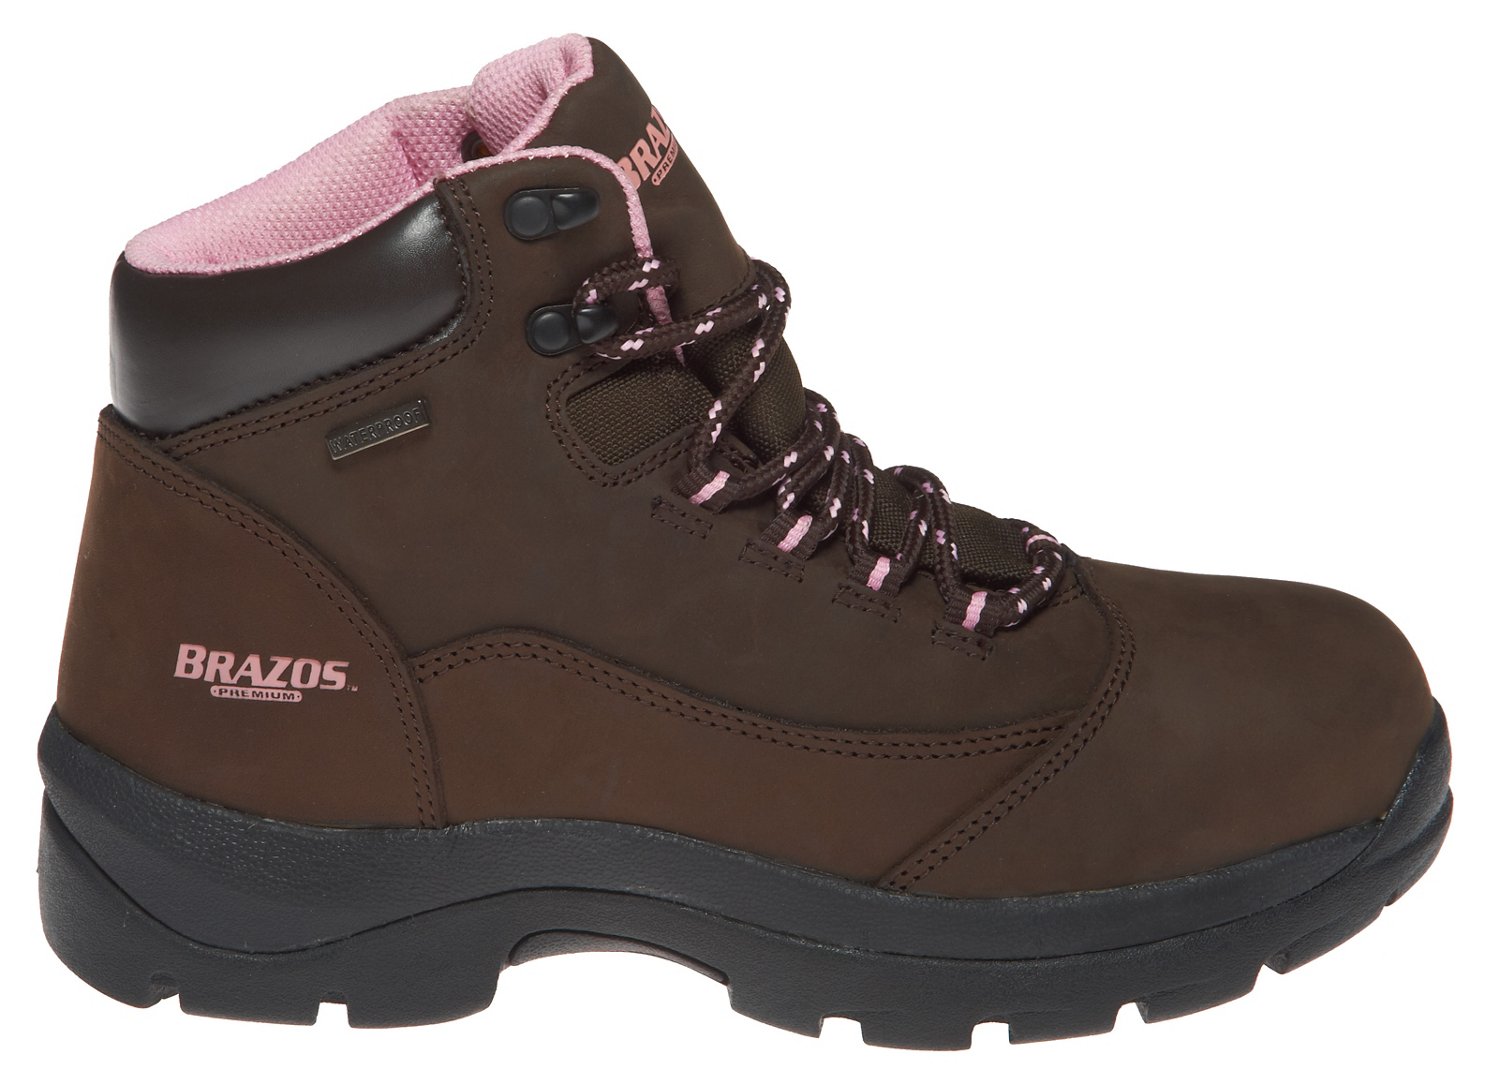 Academy - BrazosÂ® Women's Nubuck ST Waterproof Work Boots